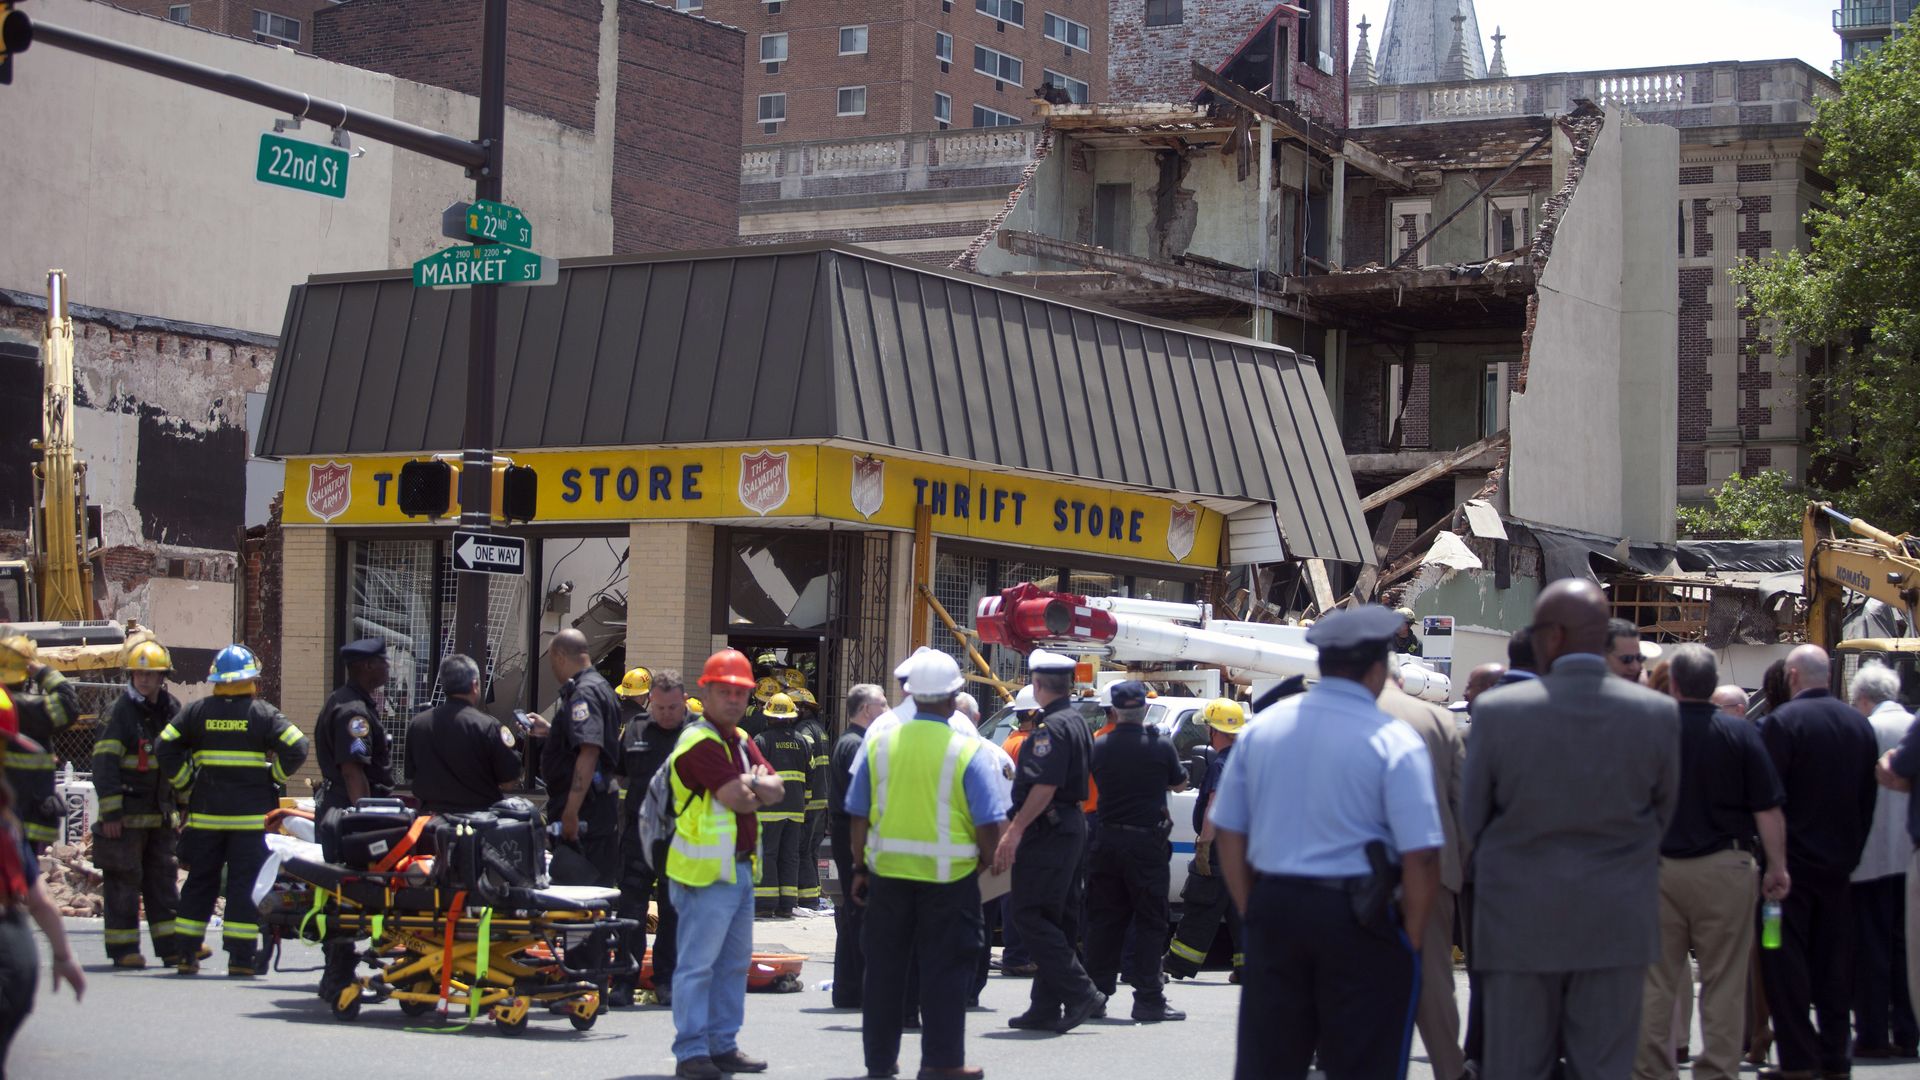 The scene of a building collapse in Philadelphia 